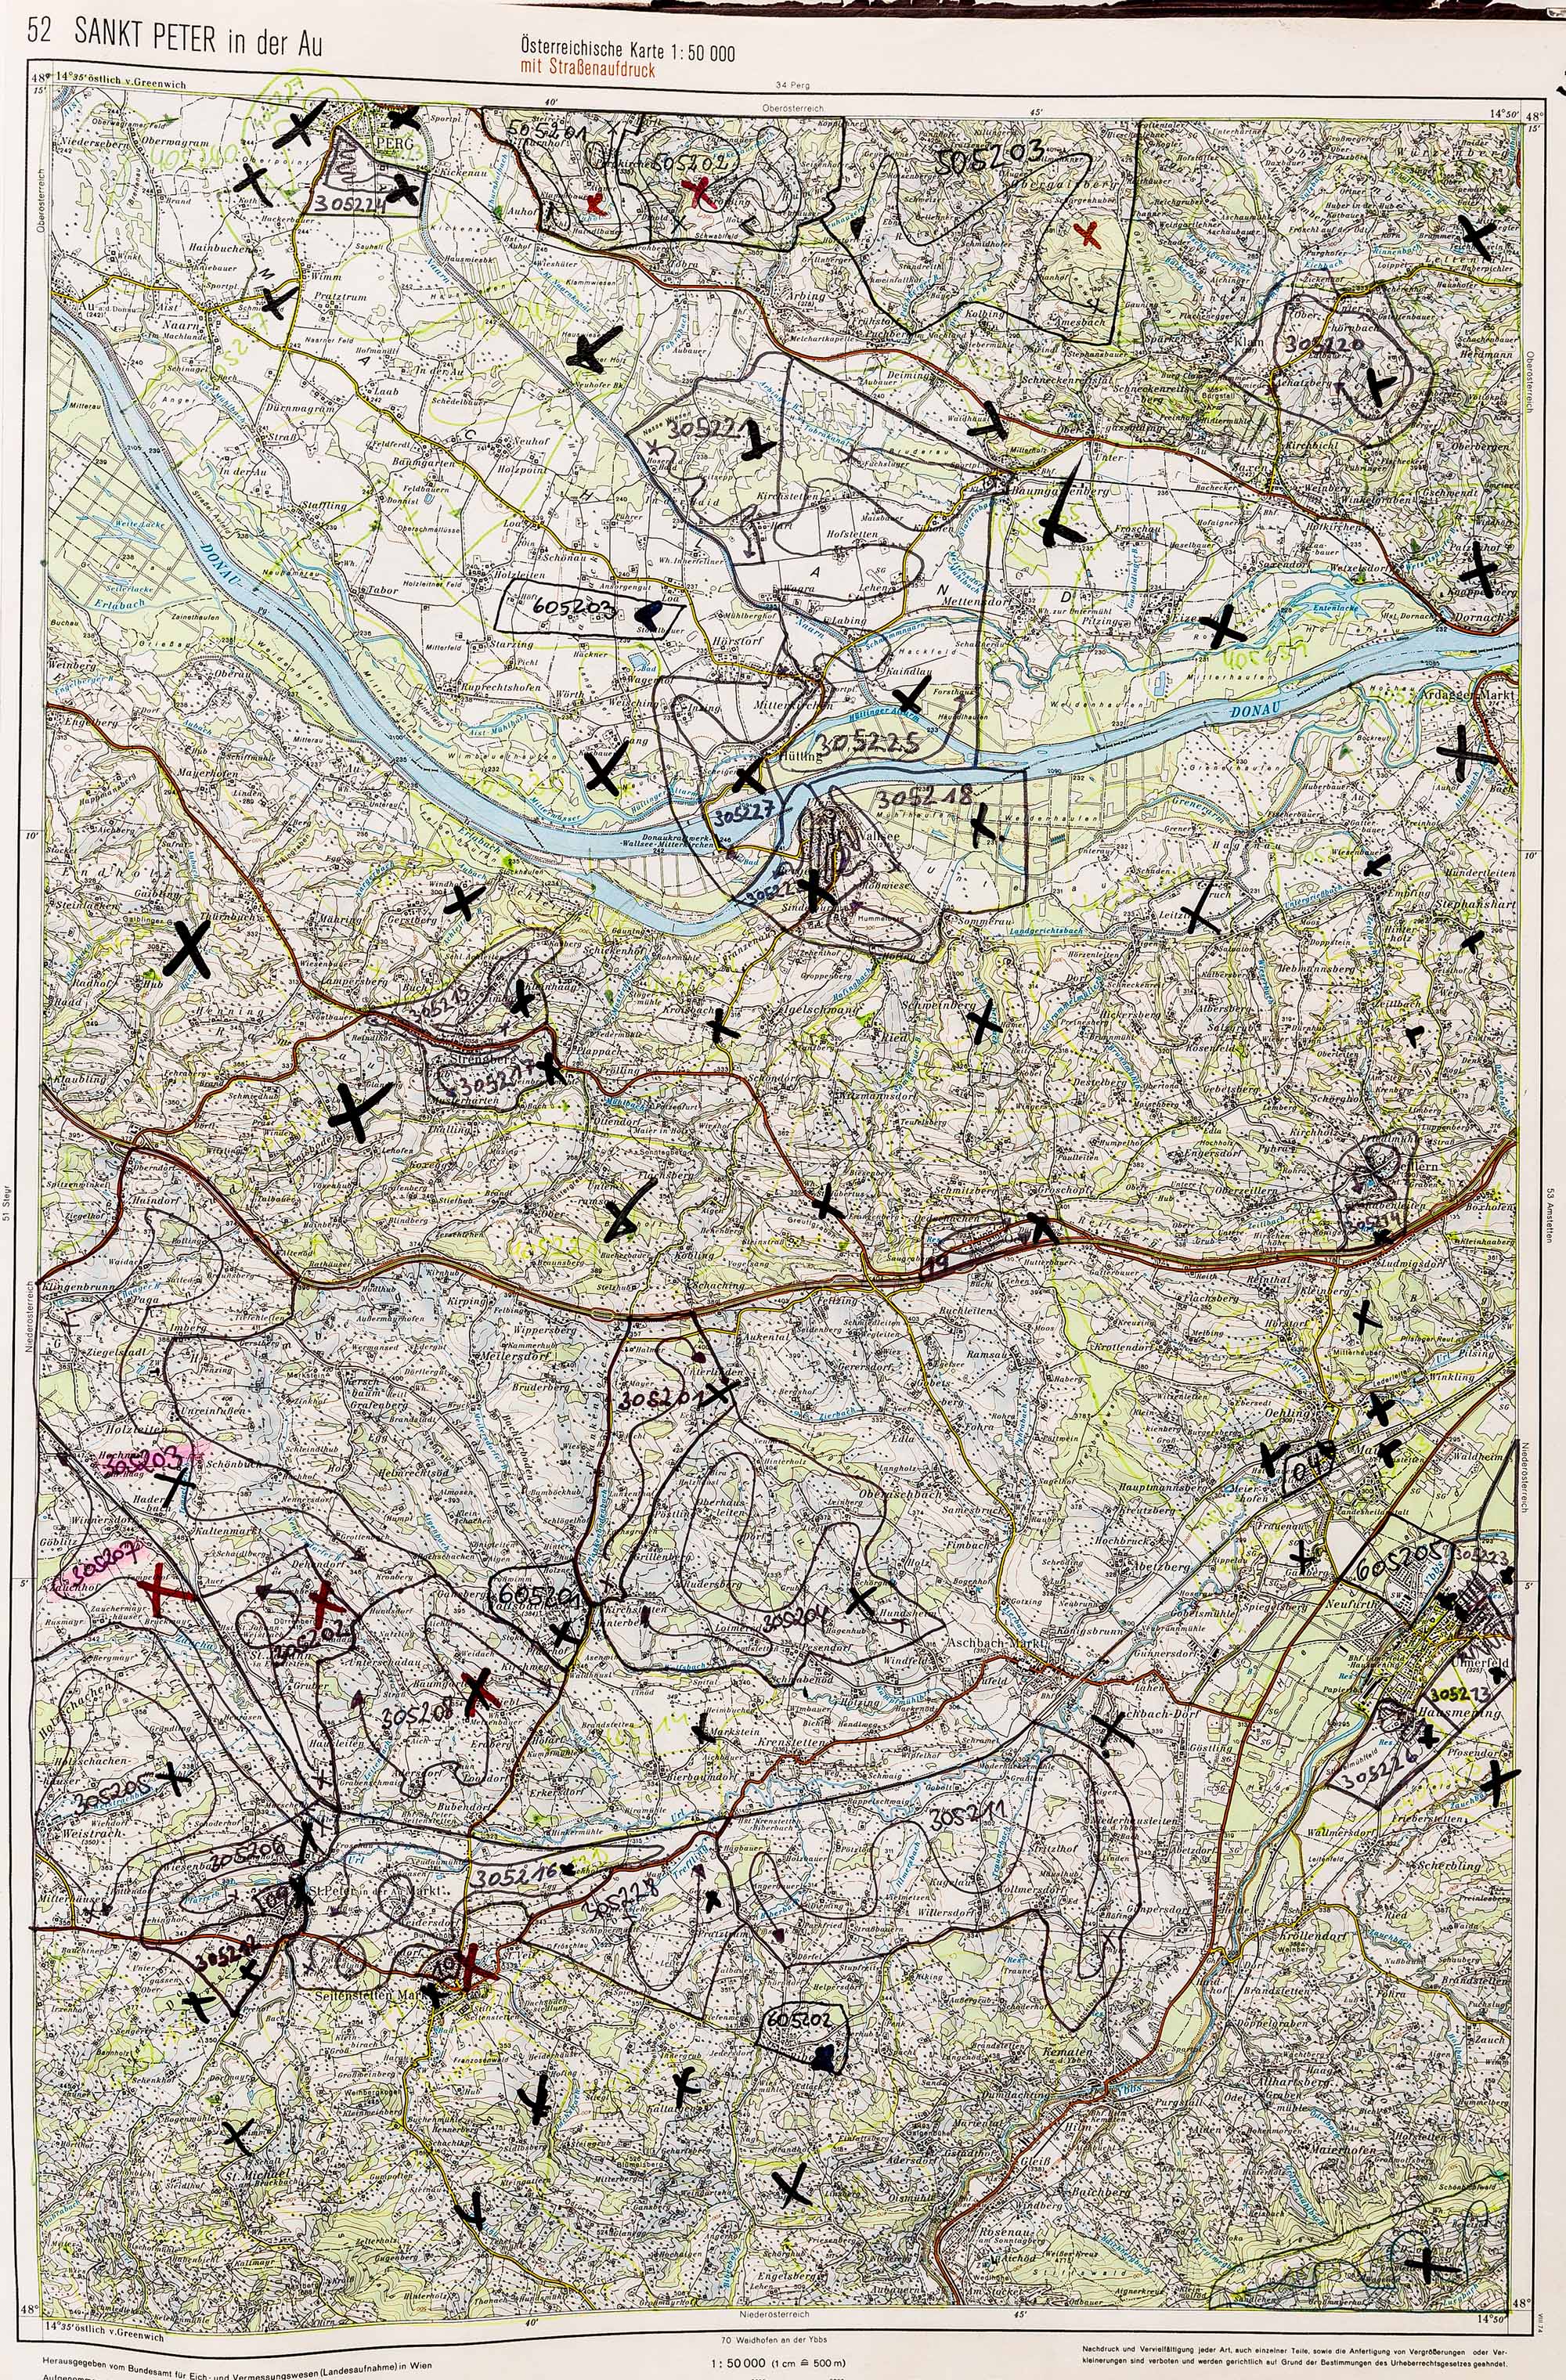 1983-1986 Karte 052